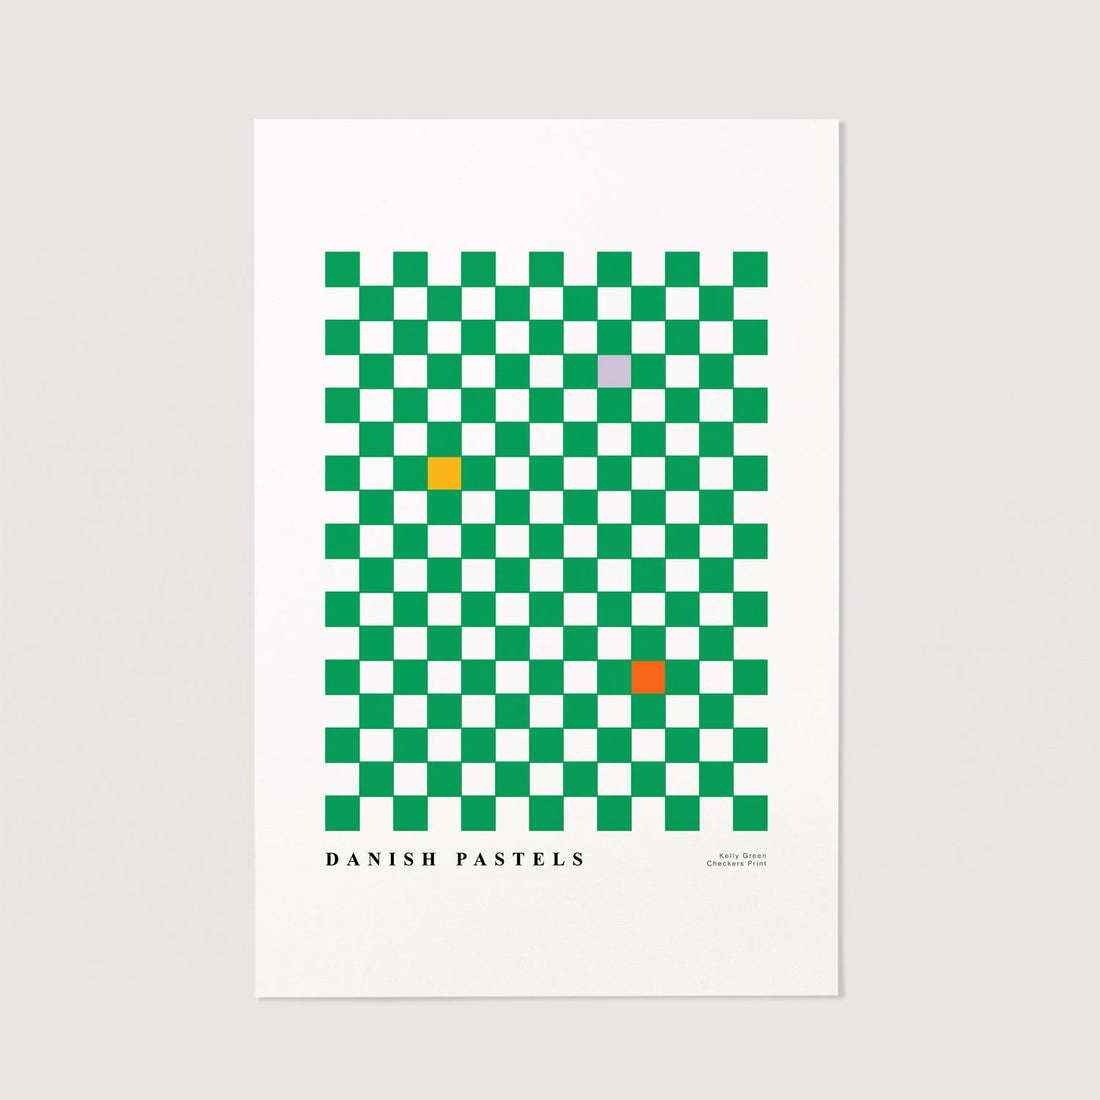 checkered pattern art poster for scandi home design